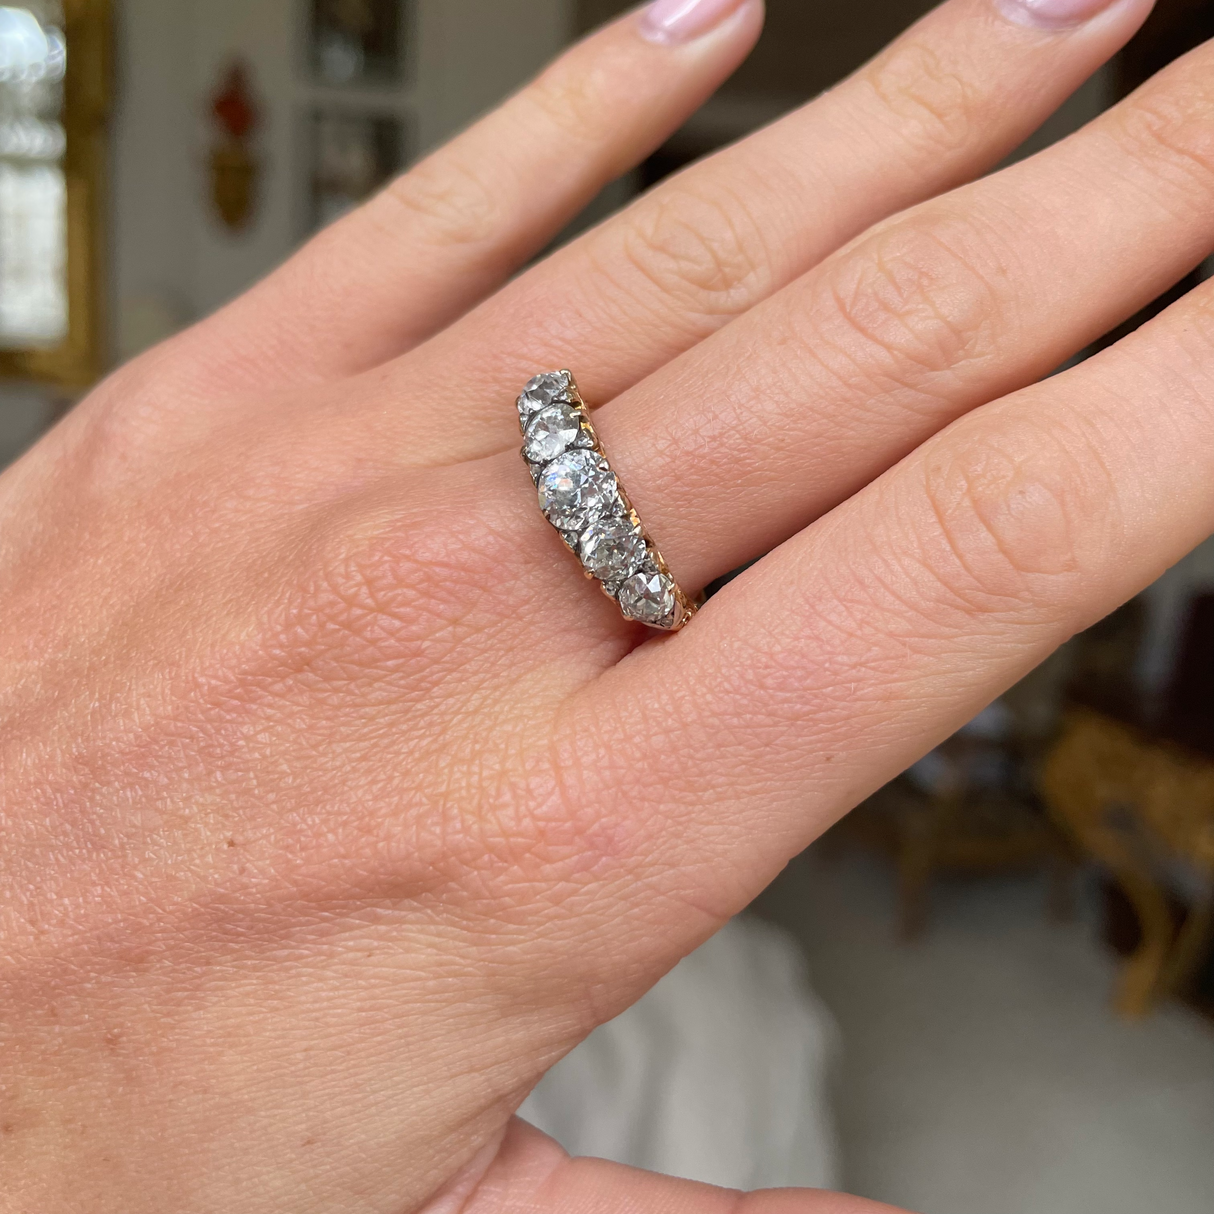 Victorian half-hoop diamond engagement ring, worn on hand.